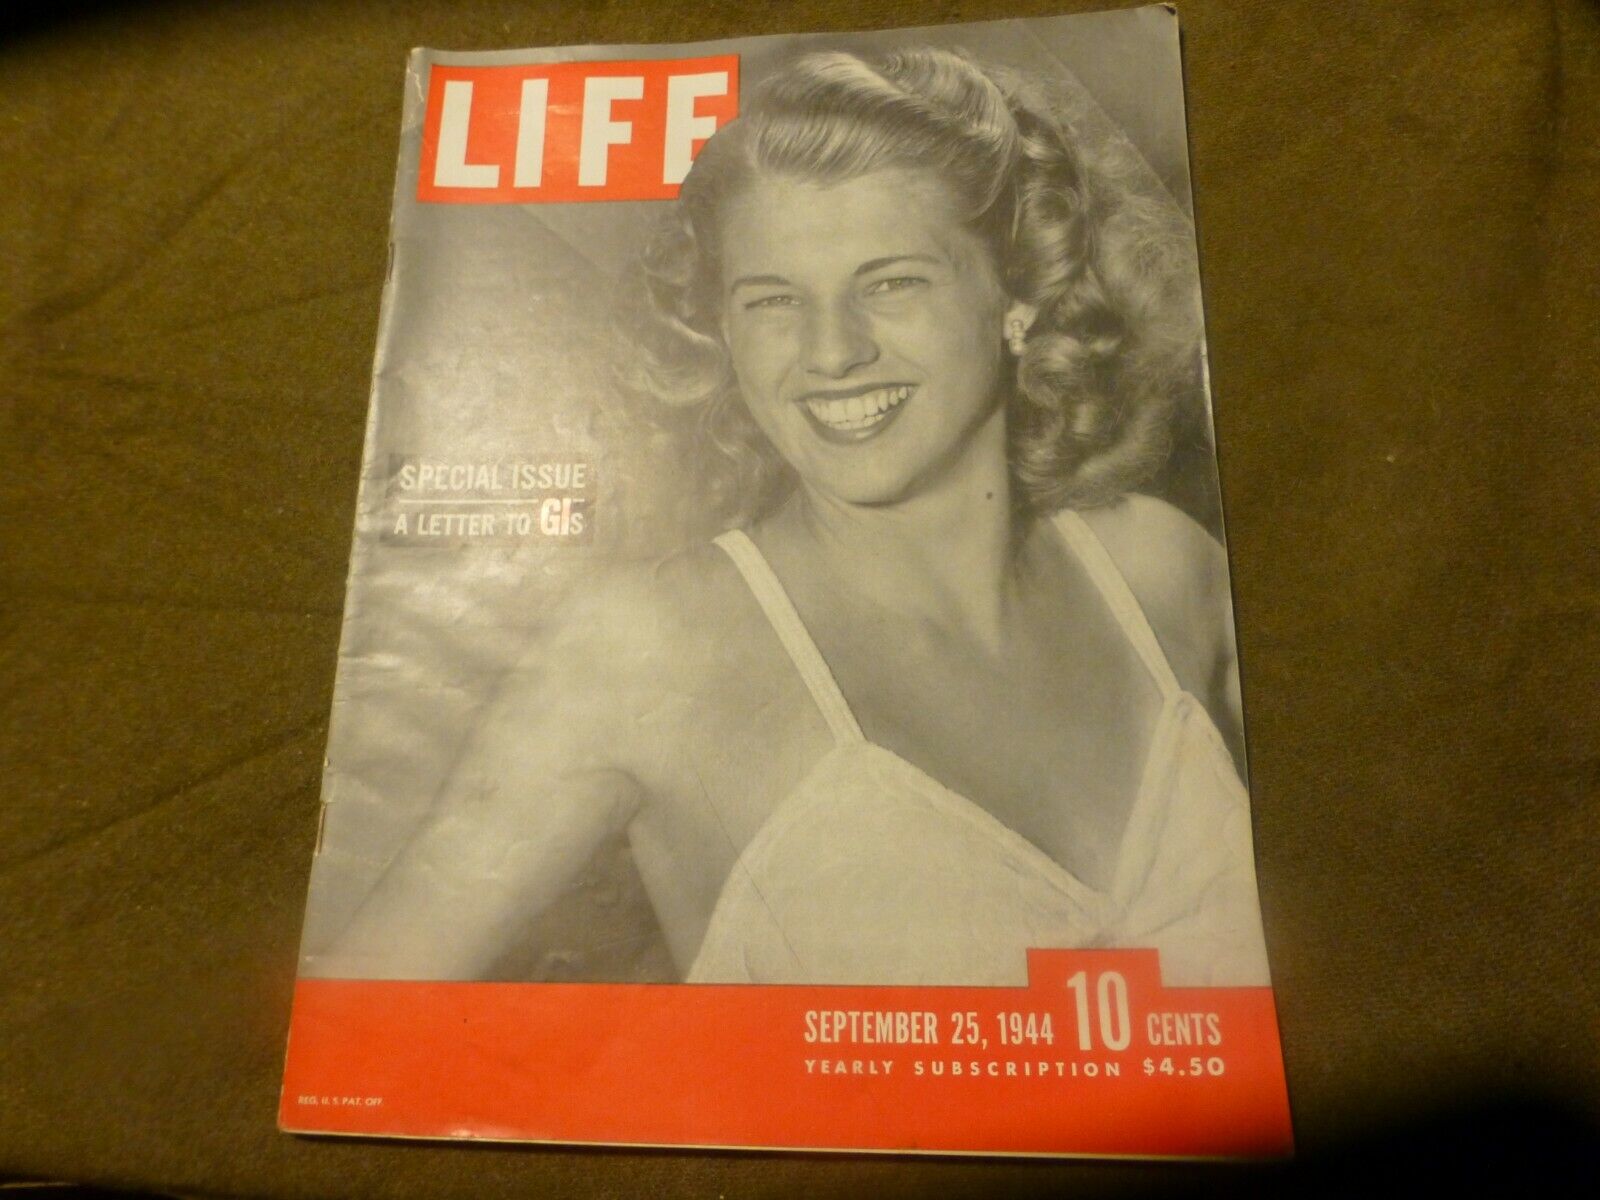 VINTAGE LIFE MAGAZINE SEPTEMBER 25, 1944 - WW II ERA- A LETTER TO GIs-SPEC.ISSUE